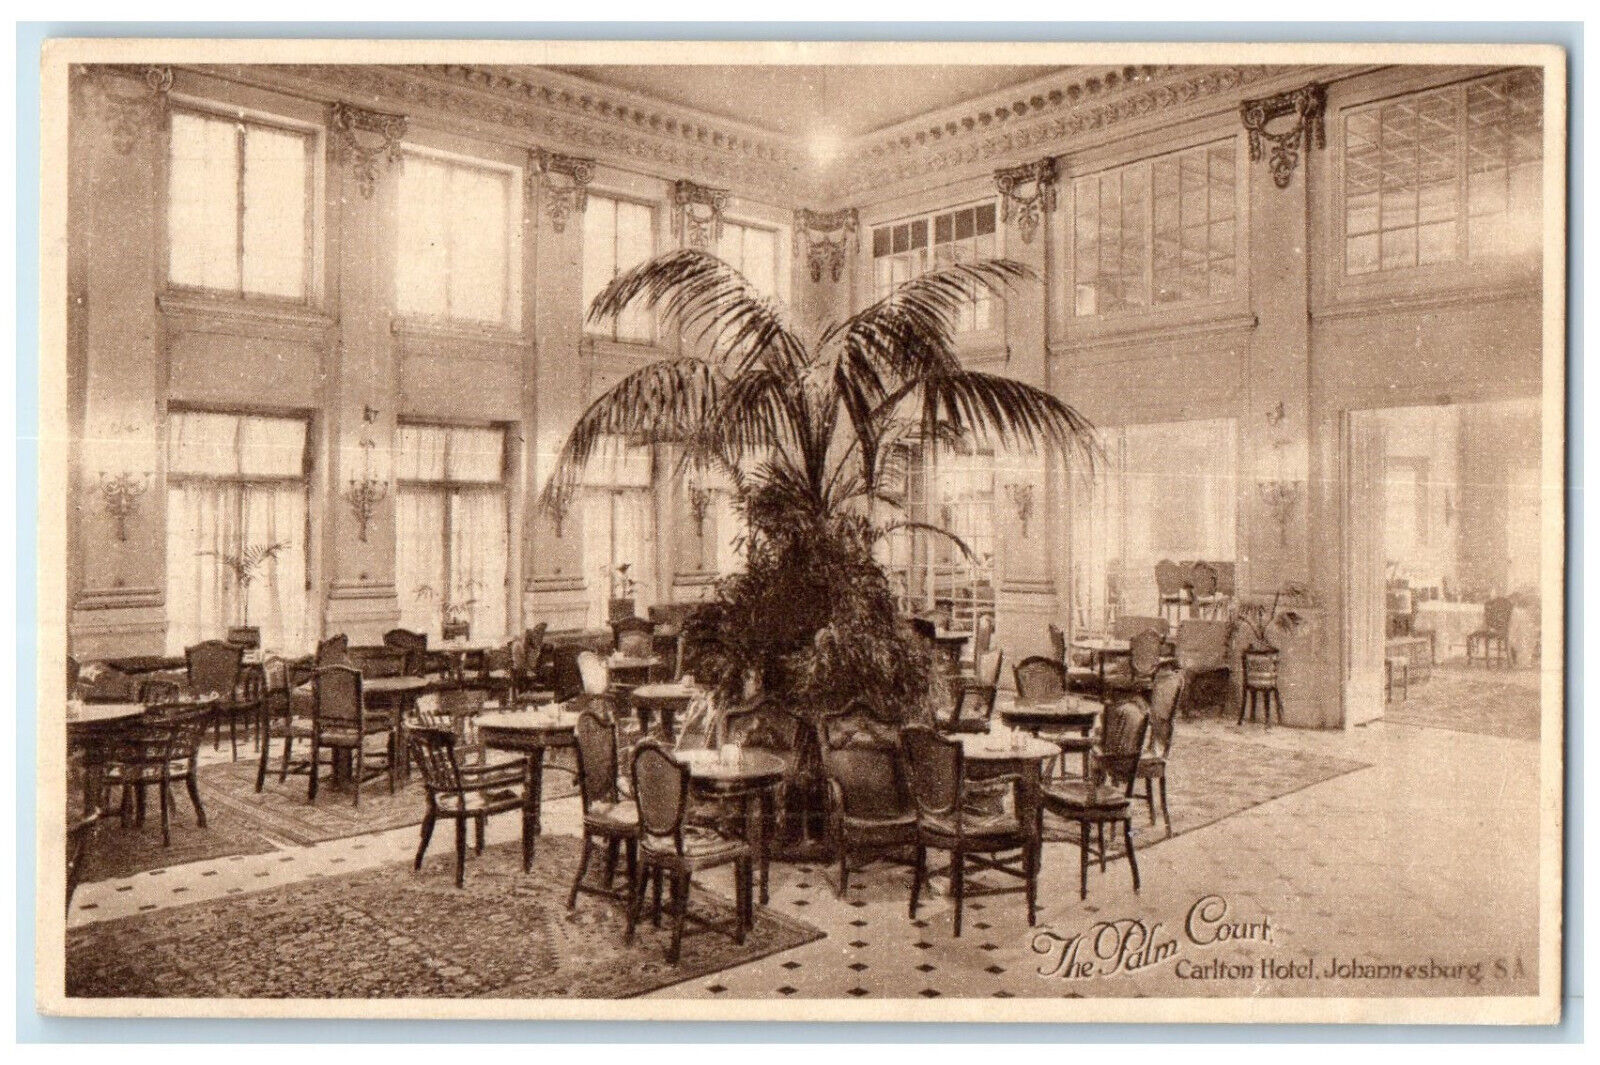 c1920's The Palm Court Carlton Hotel Johannesburg South Africa Postcard